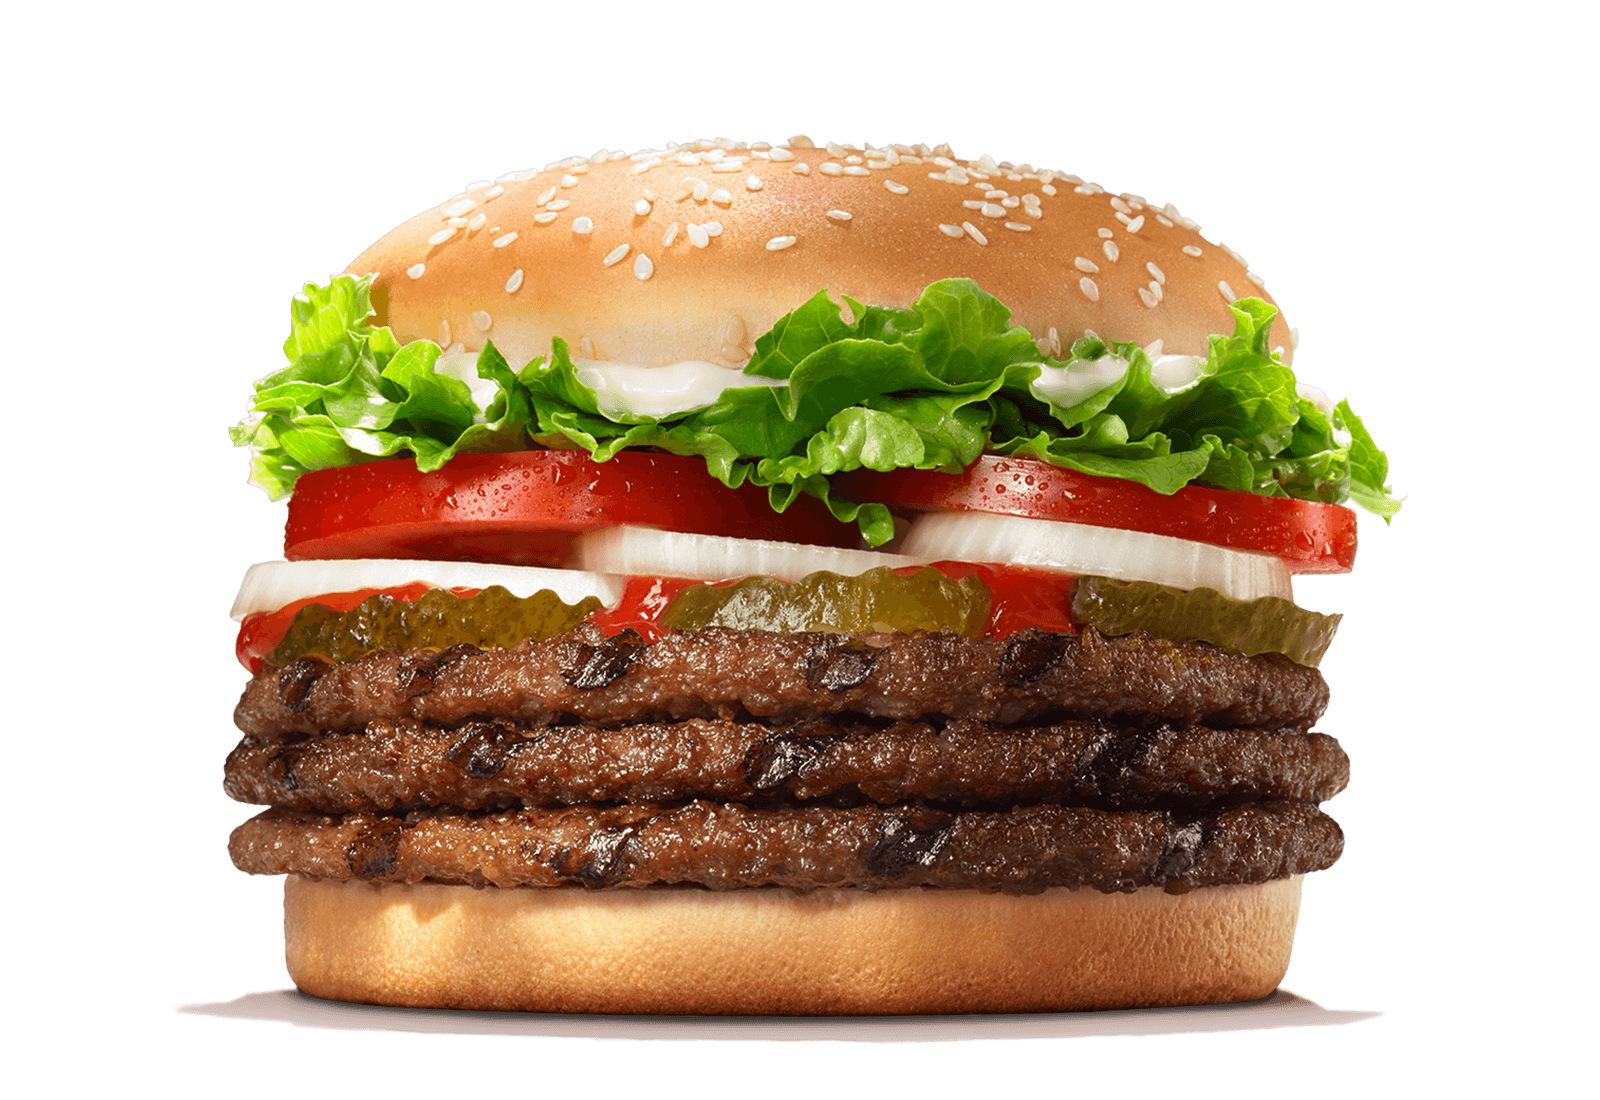 download-king-whopper-hamburger-big-veggie-burger-hq-png-image-freepngimg